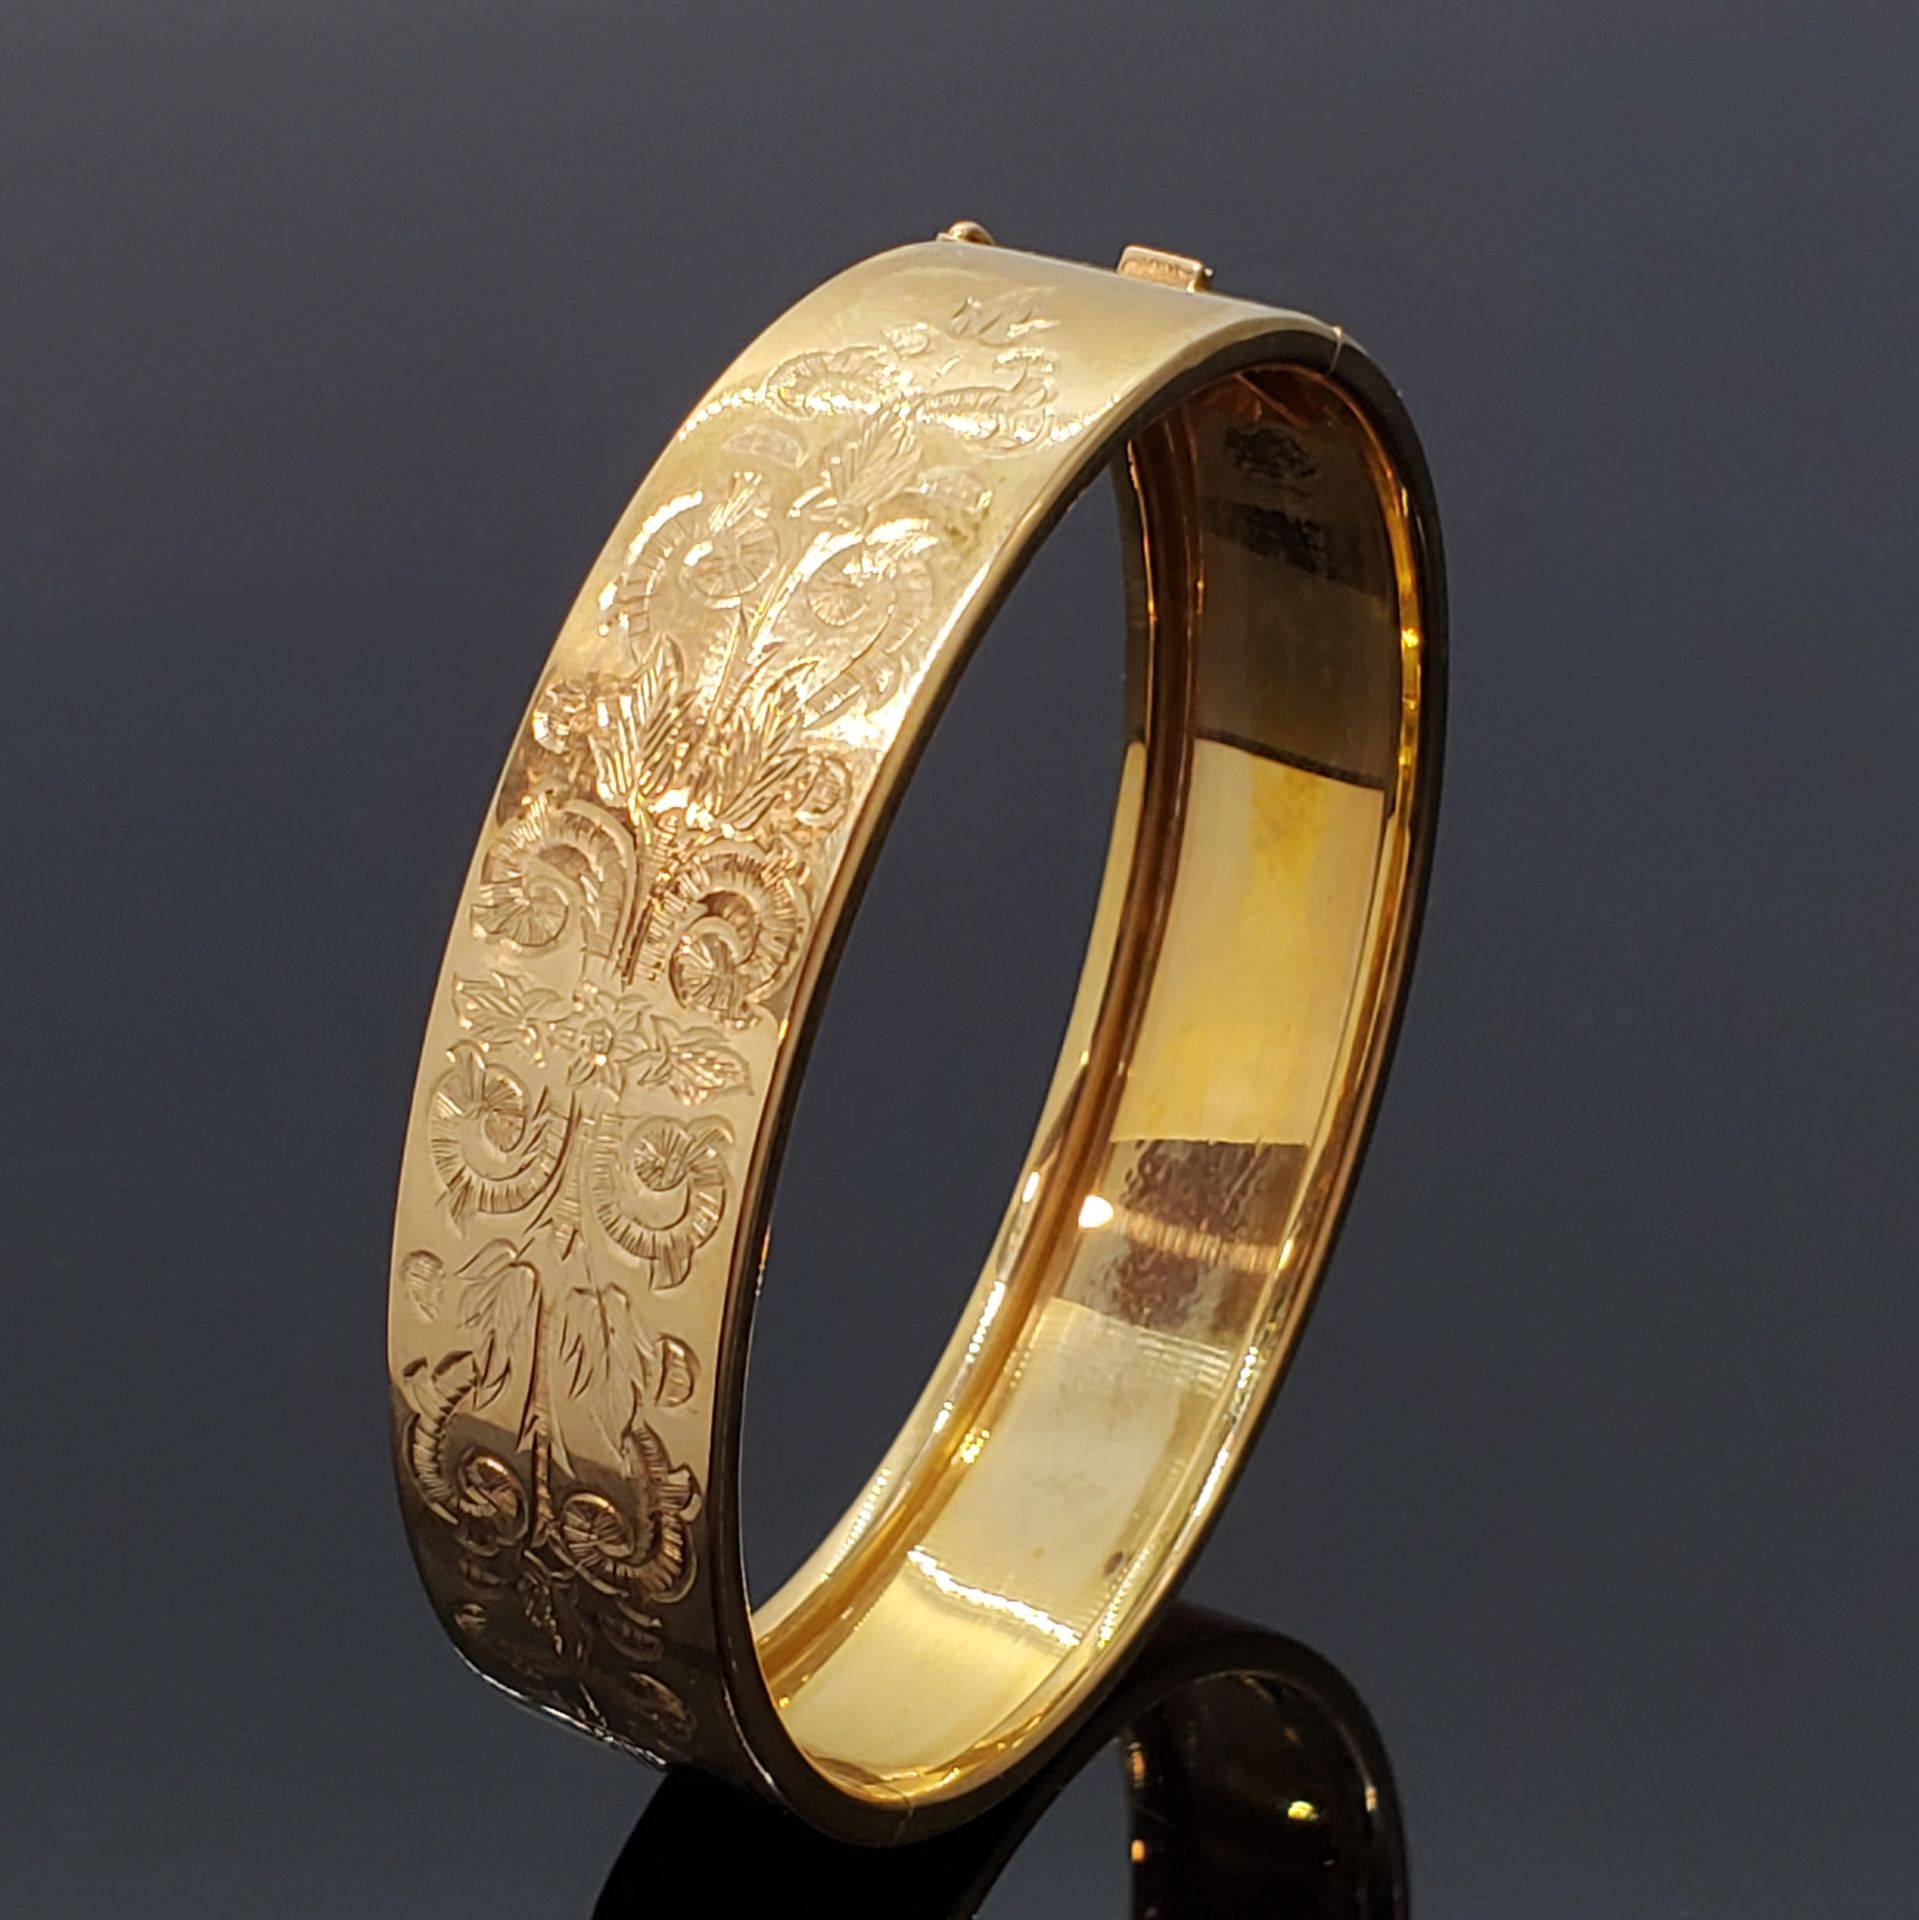 Null 750密尔黄金手镯，素色背景上刻有树叶图案。重量21克 直径6 x 5.4厘米